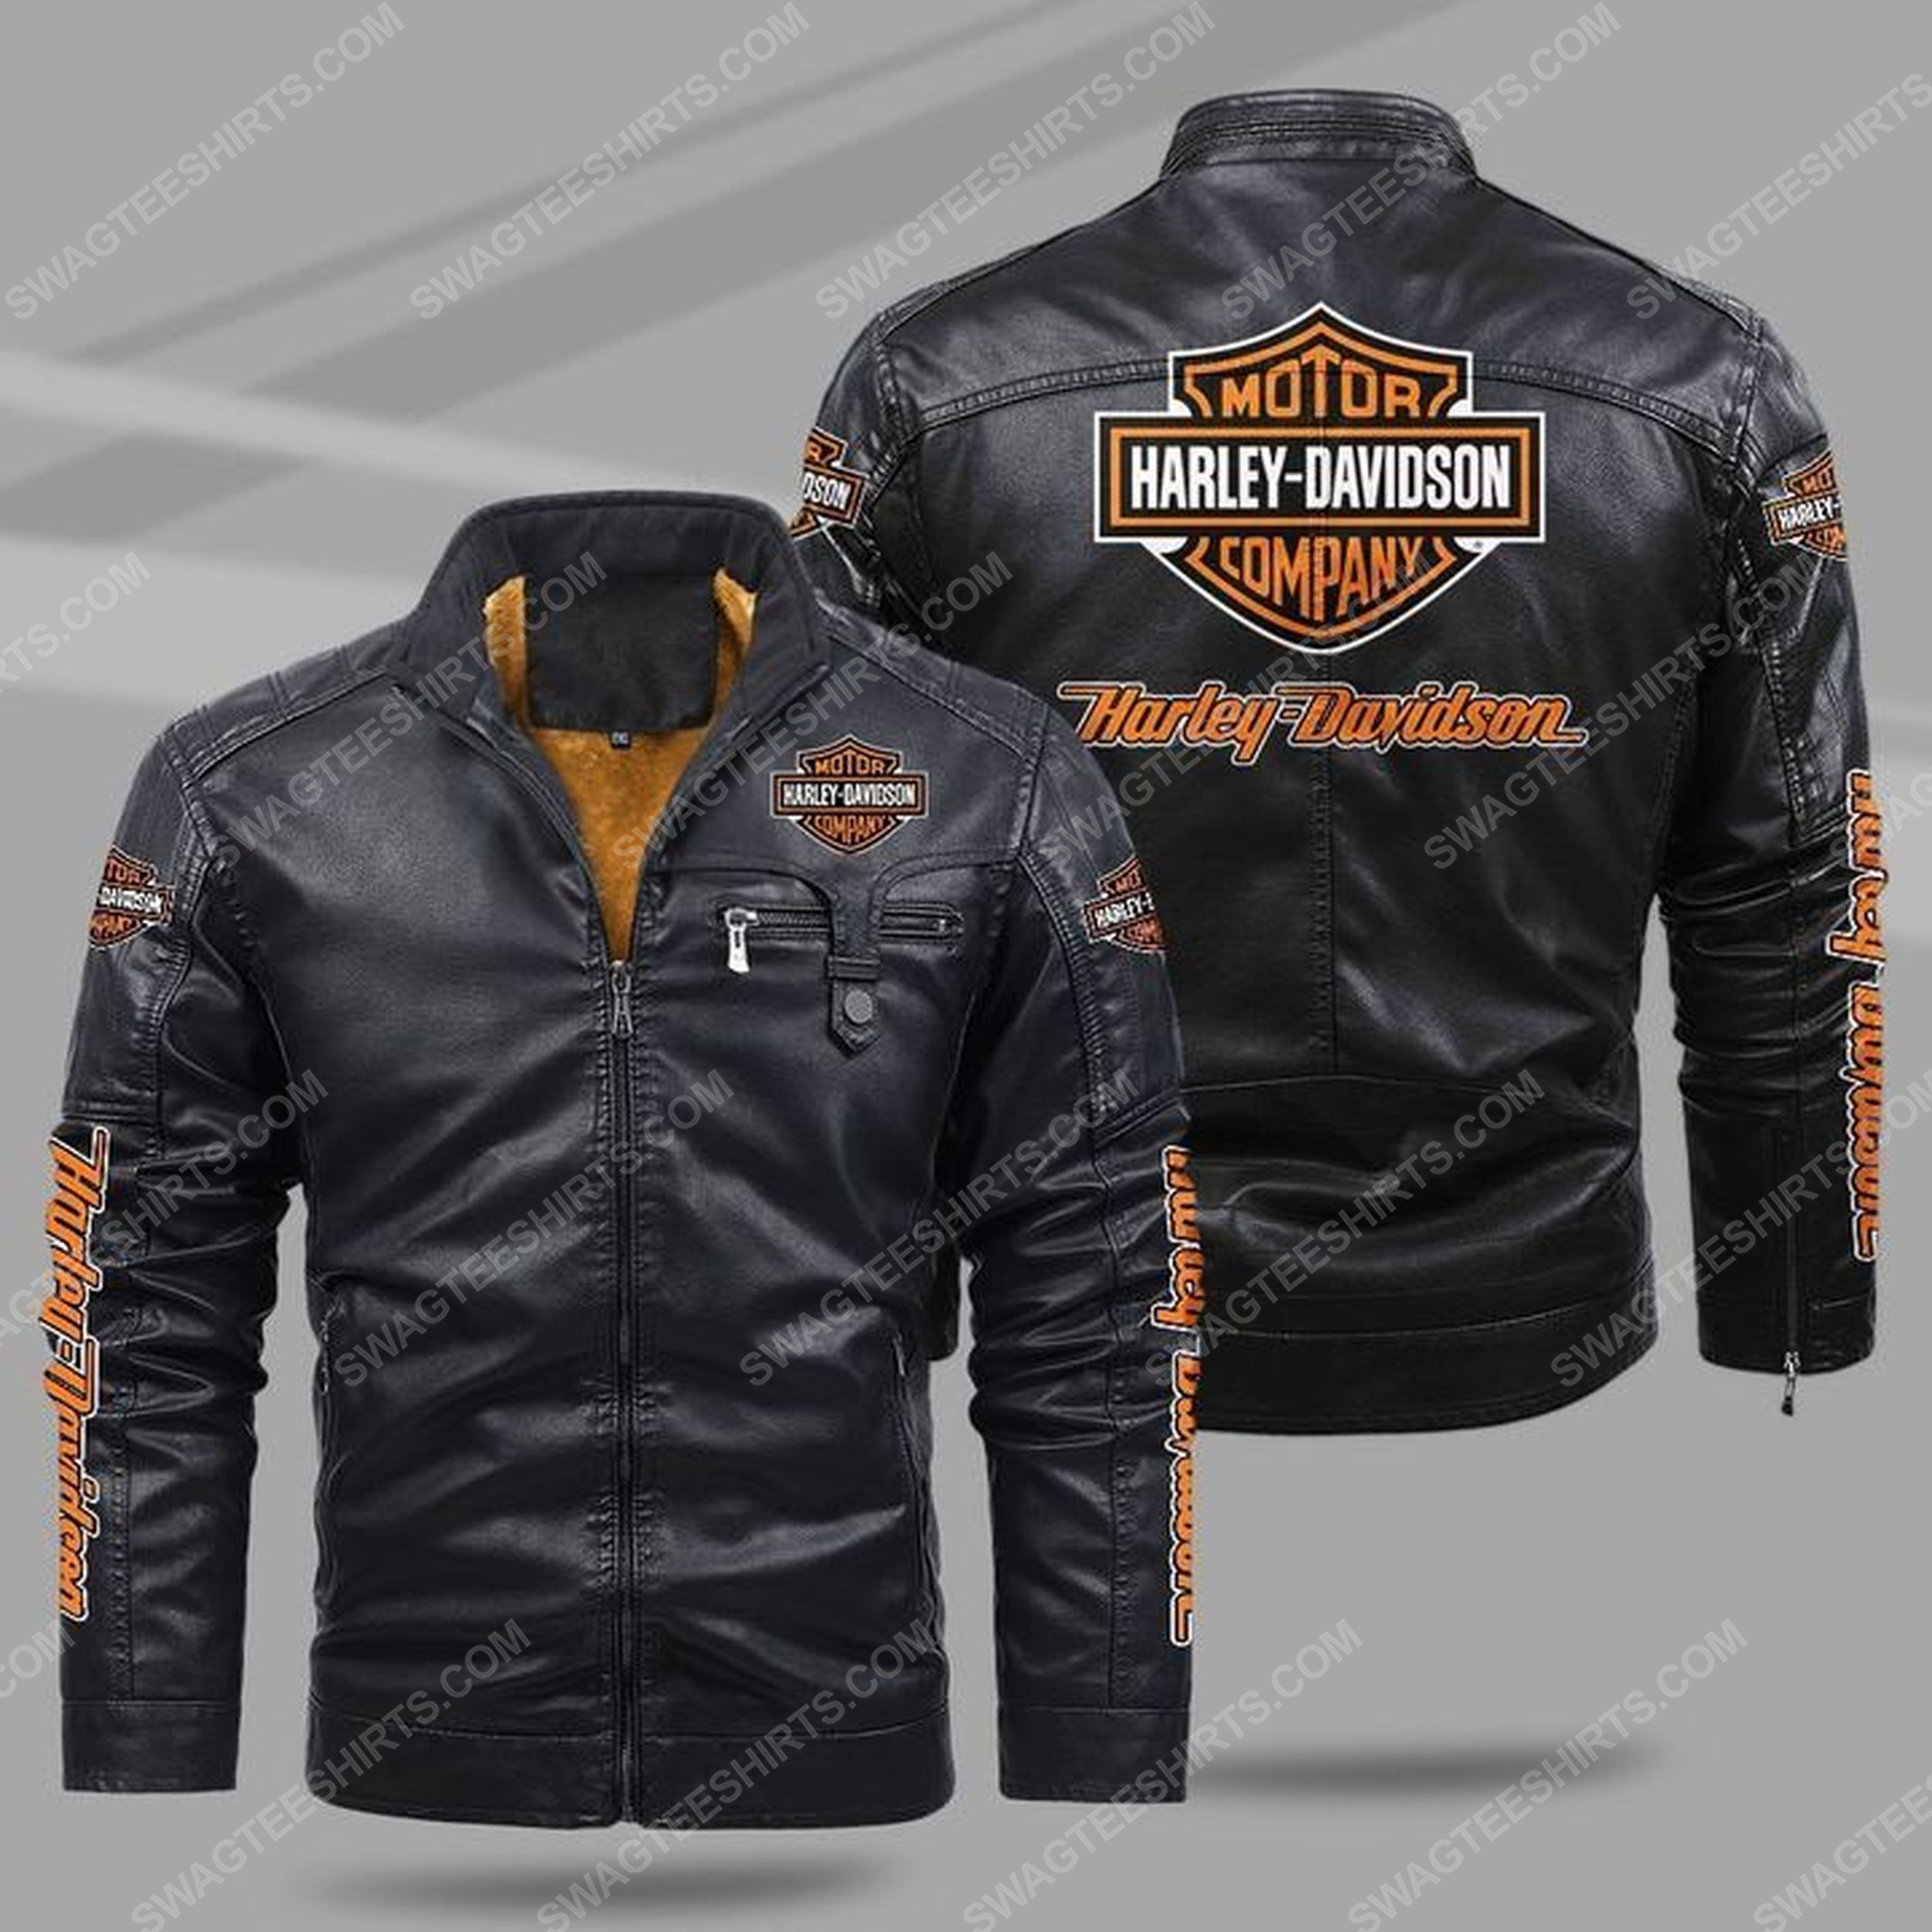 The harley davidson motorcycle all over print fleece leather jacket - black 1 - Copy